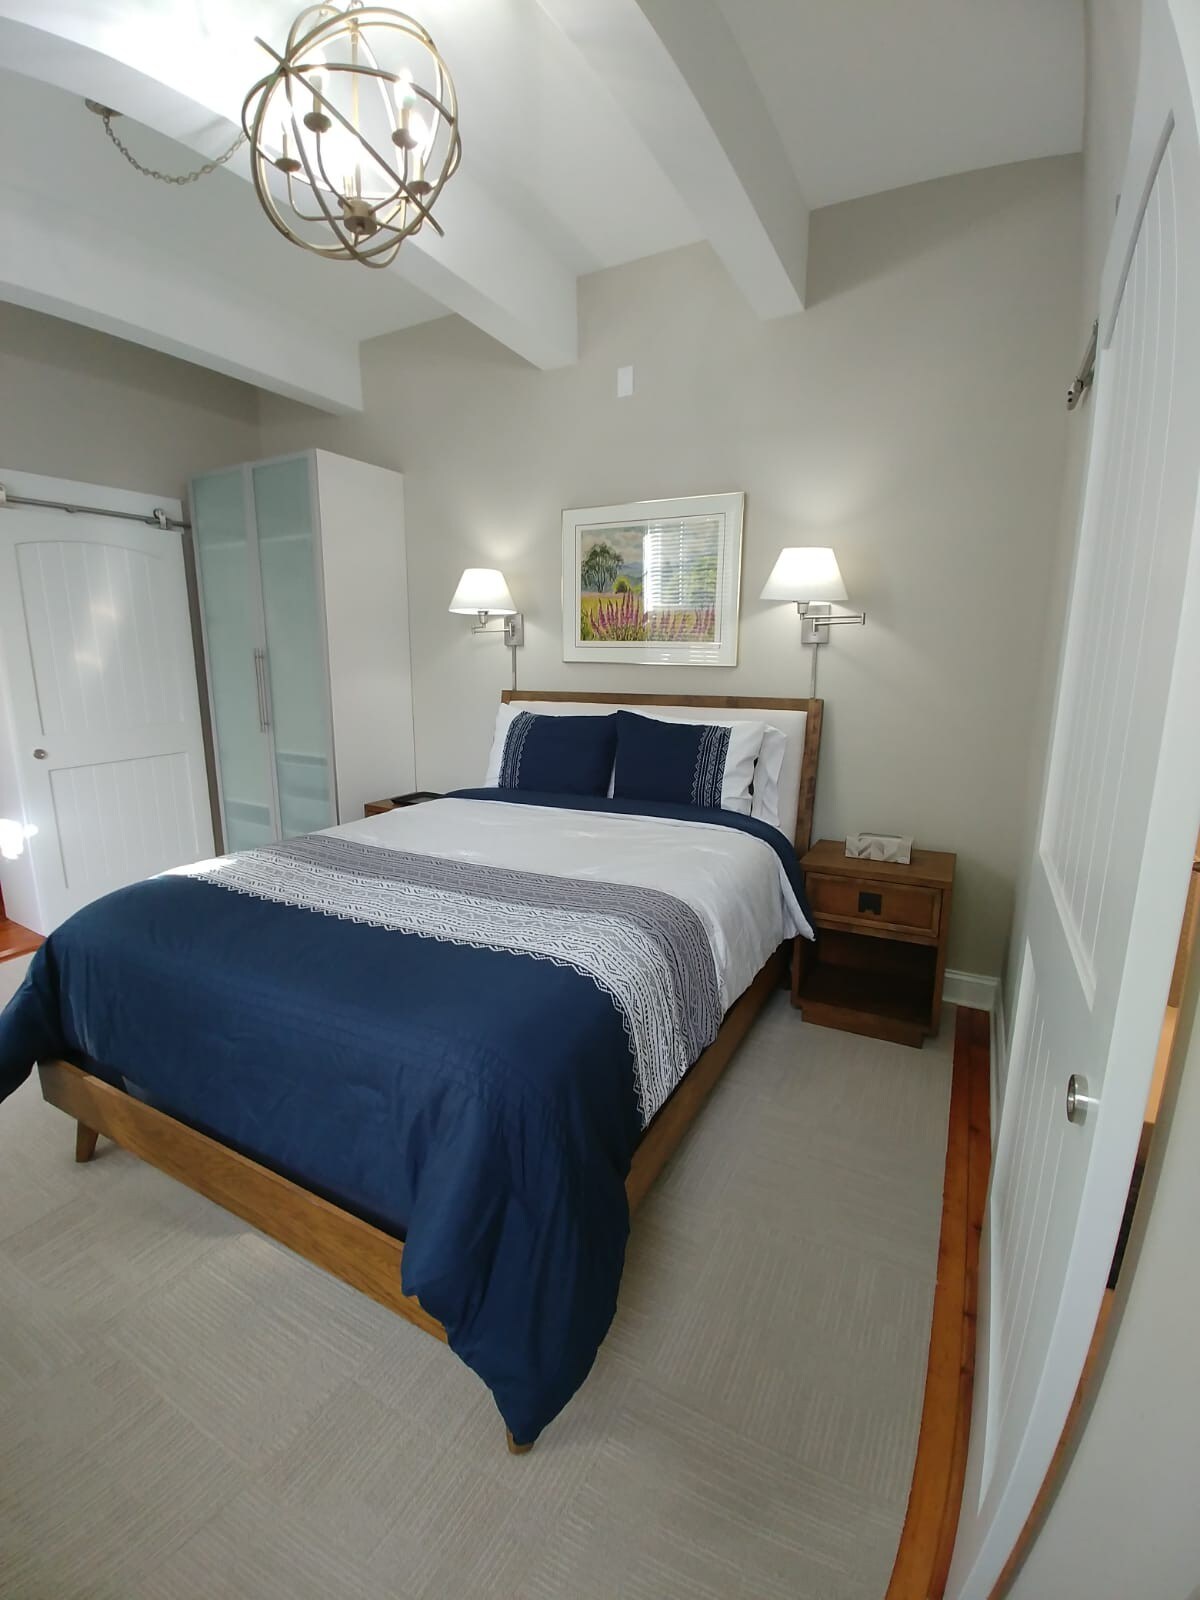 #5 Luxury 1 bedroom apt in historic Penfield house